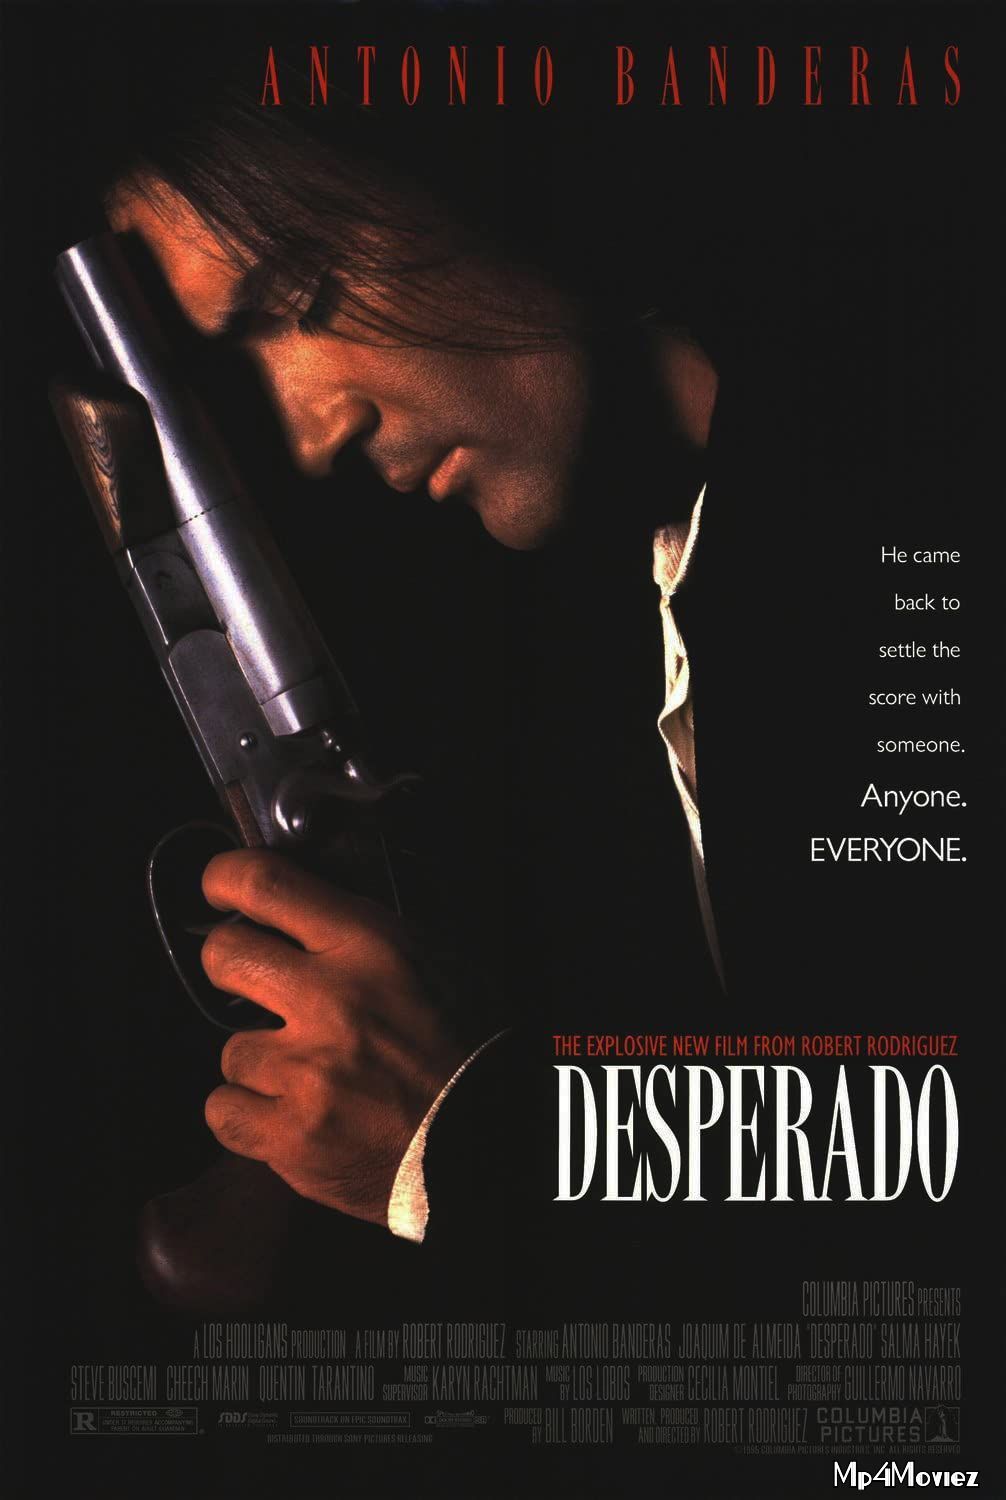 Desperado (1995) Hindi Dubbed Movie download full movie